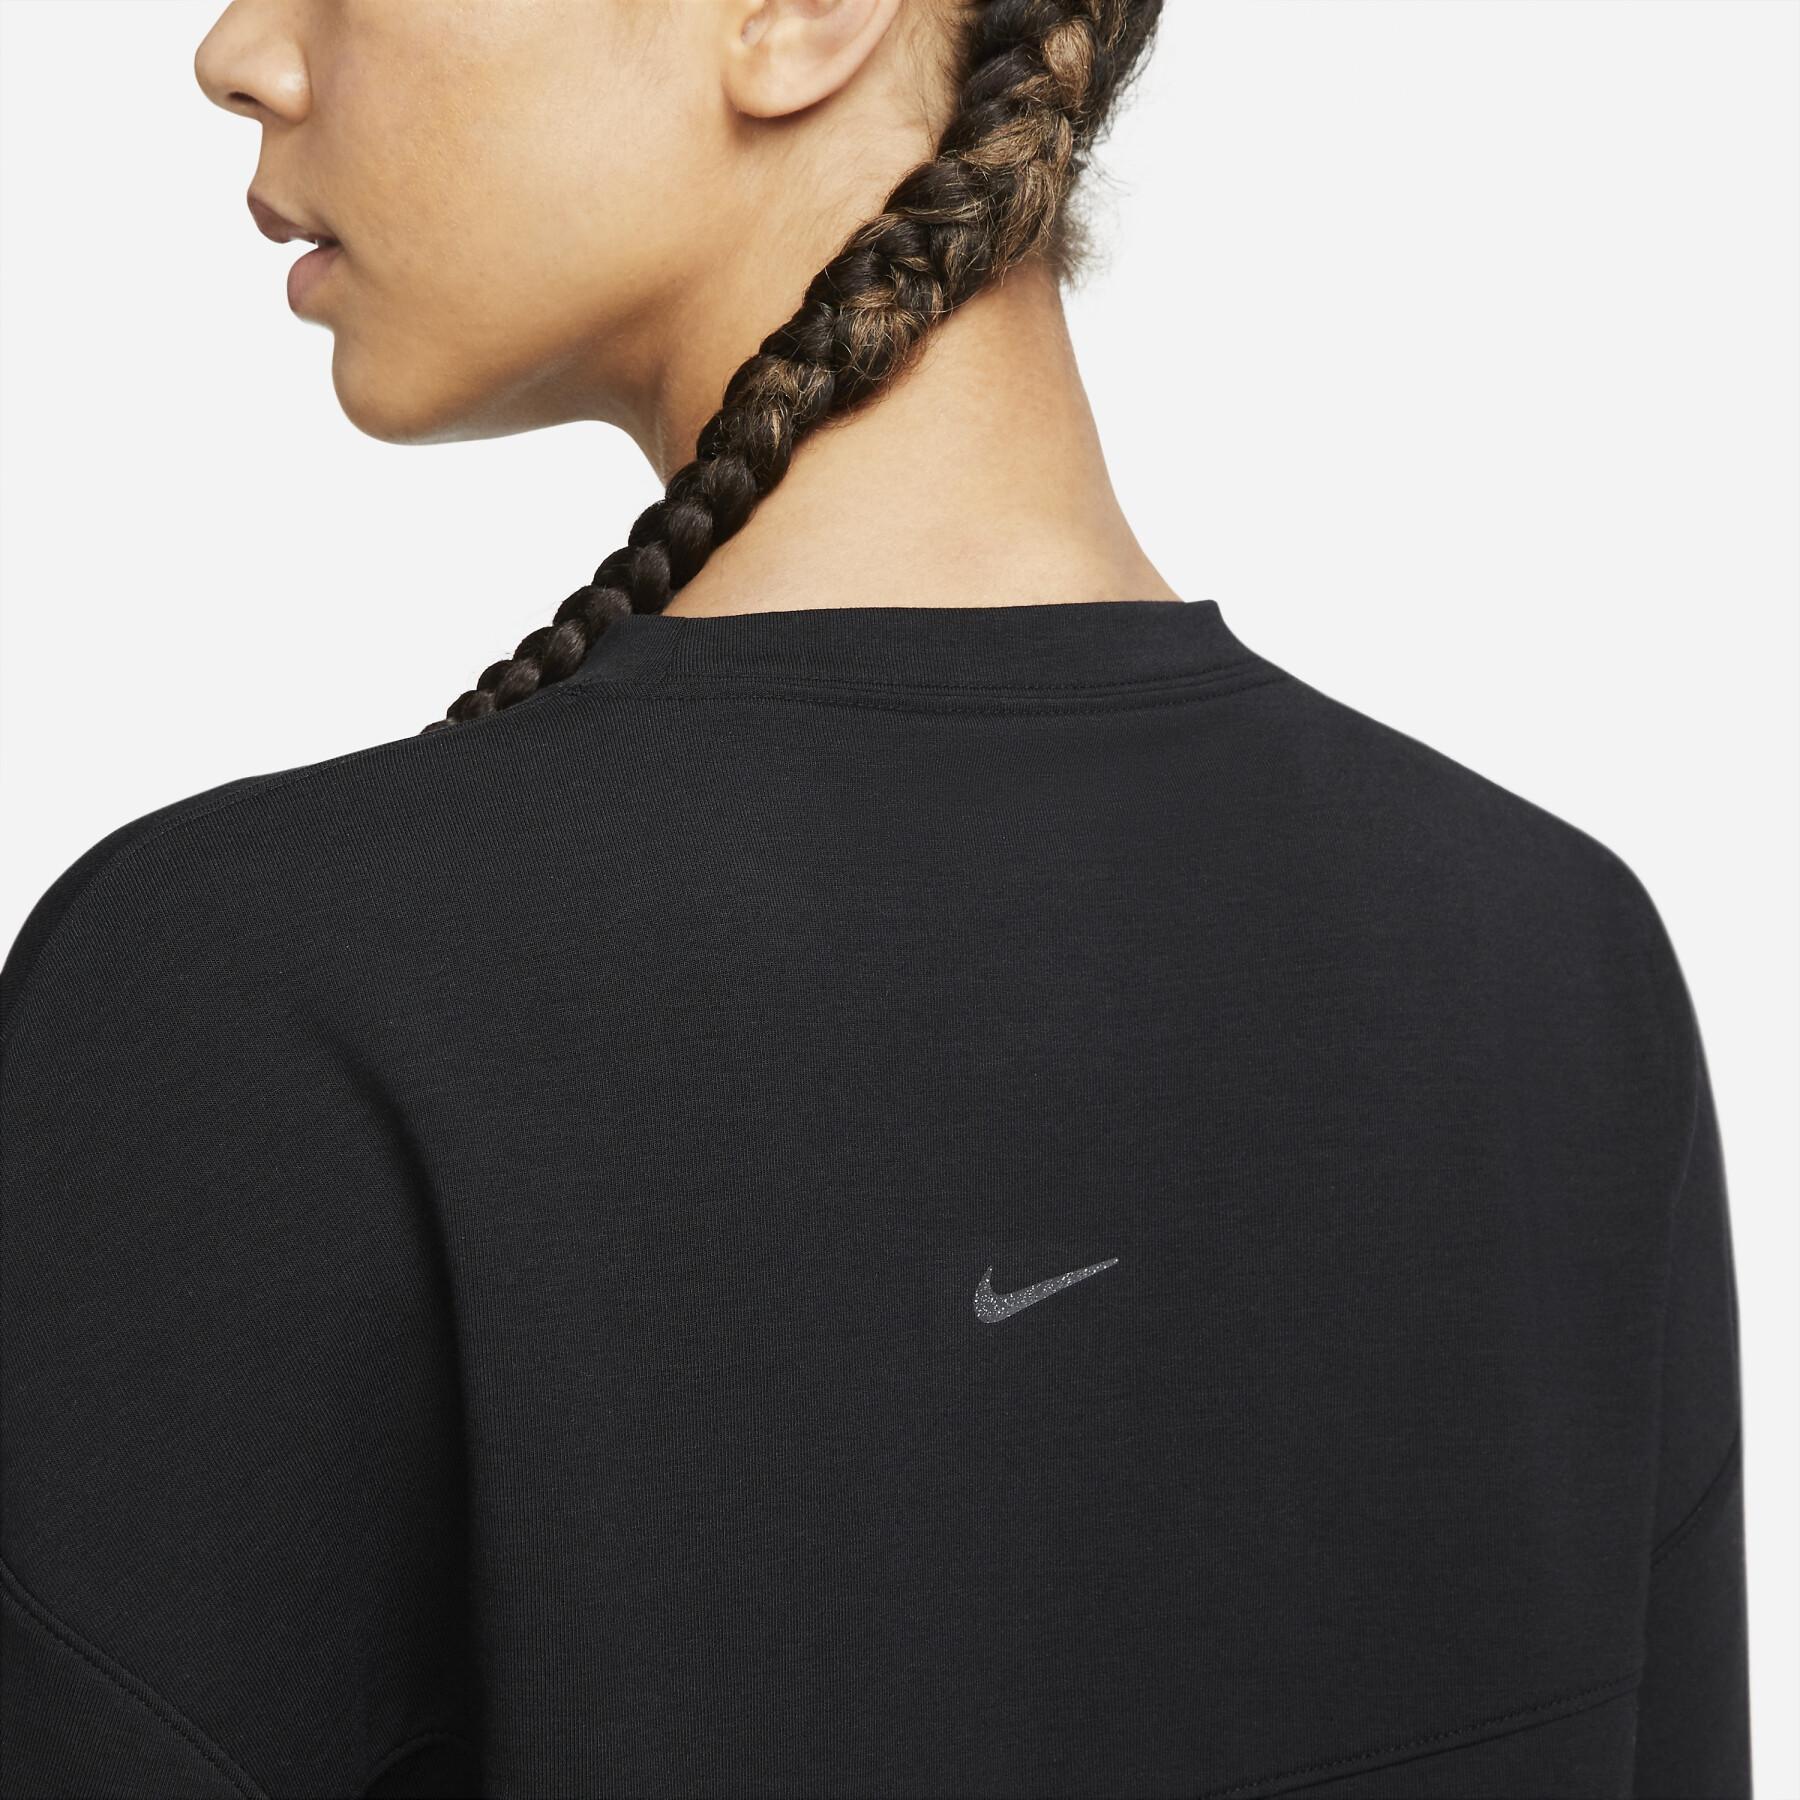 Sweatshirt cuello redondo de mujer Nike Dri-Fit FLC